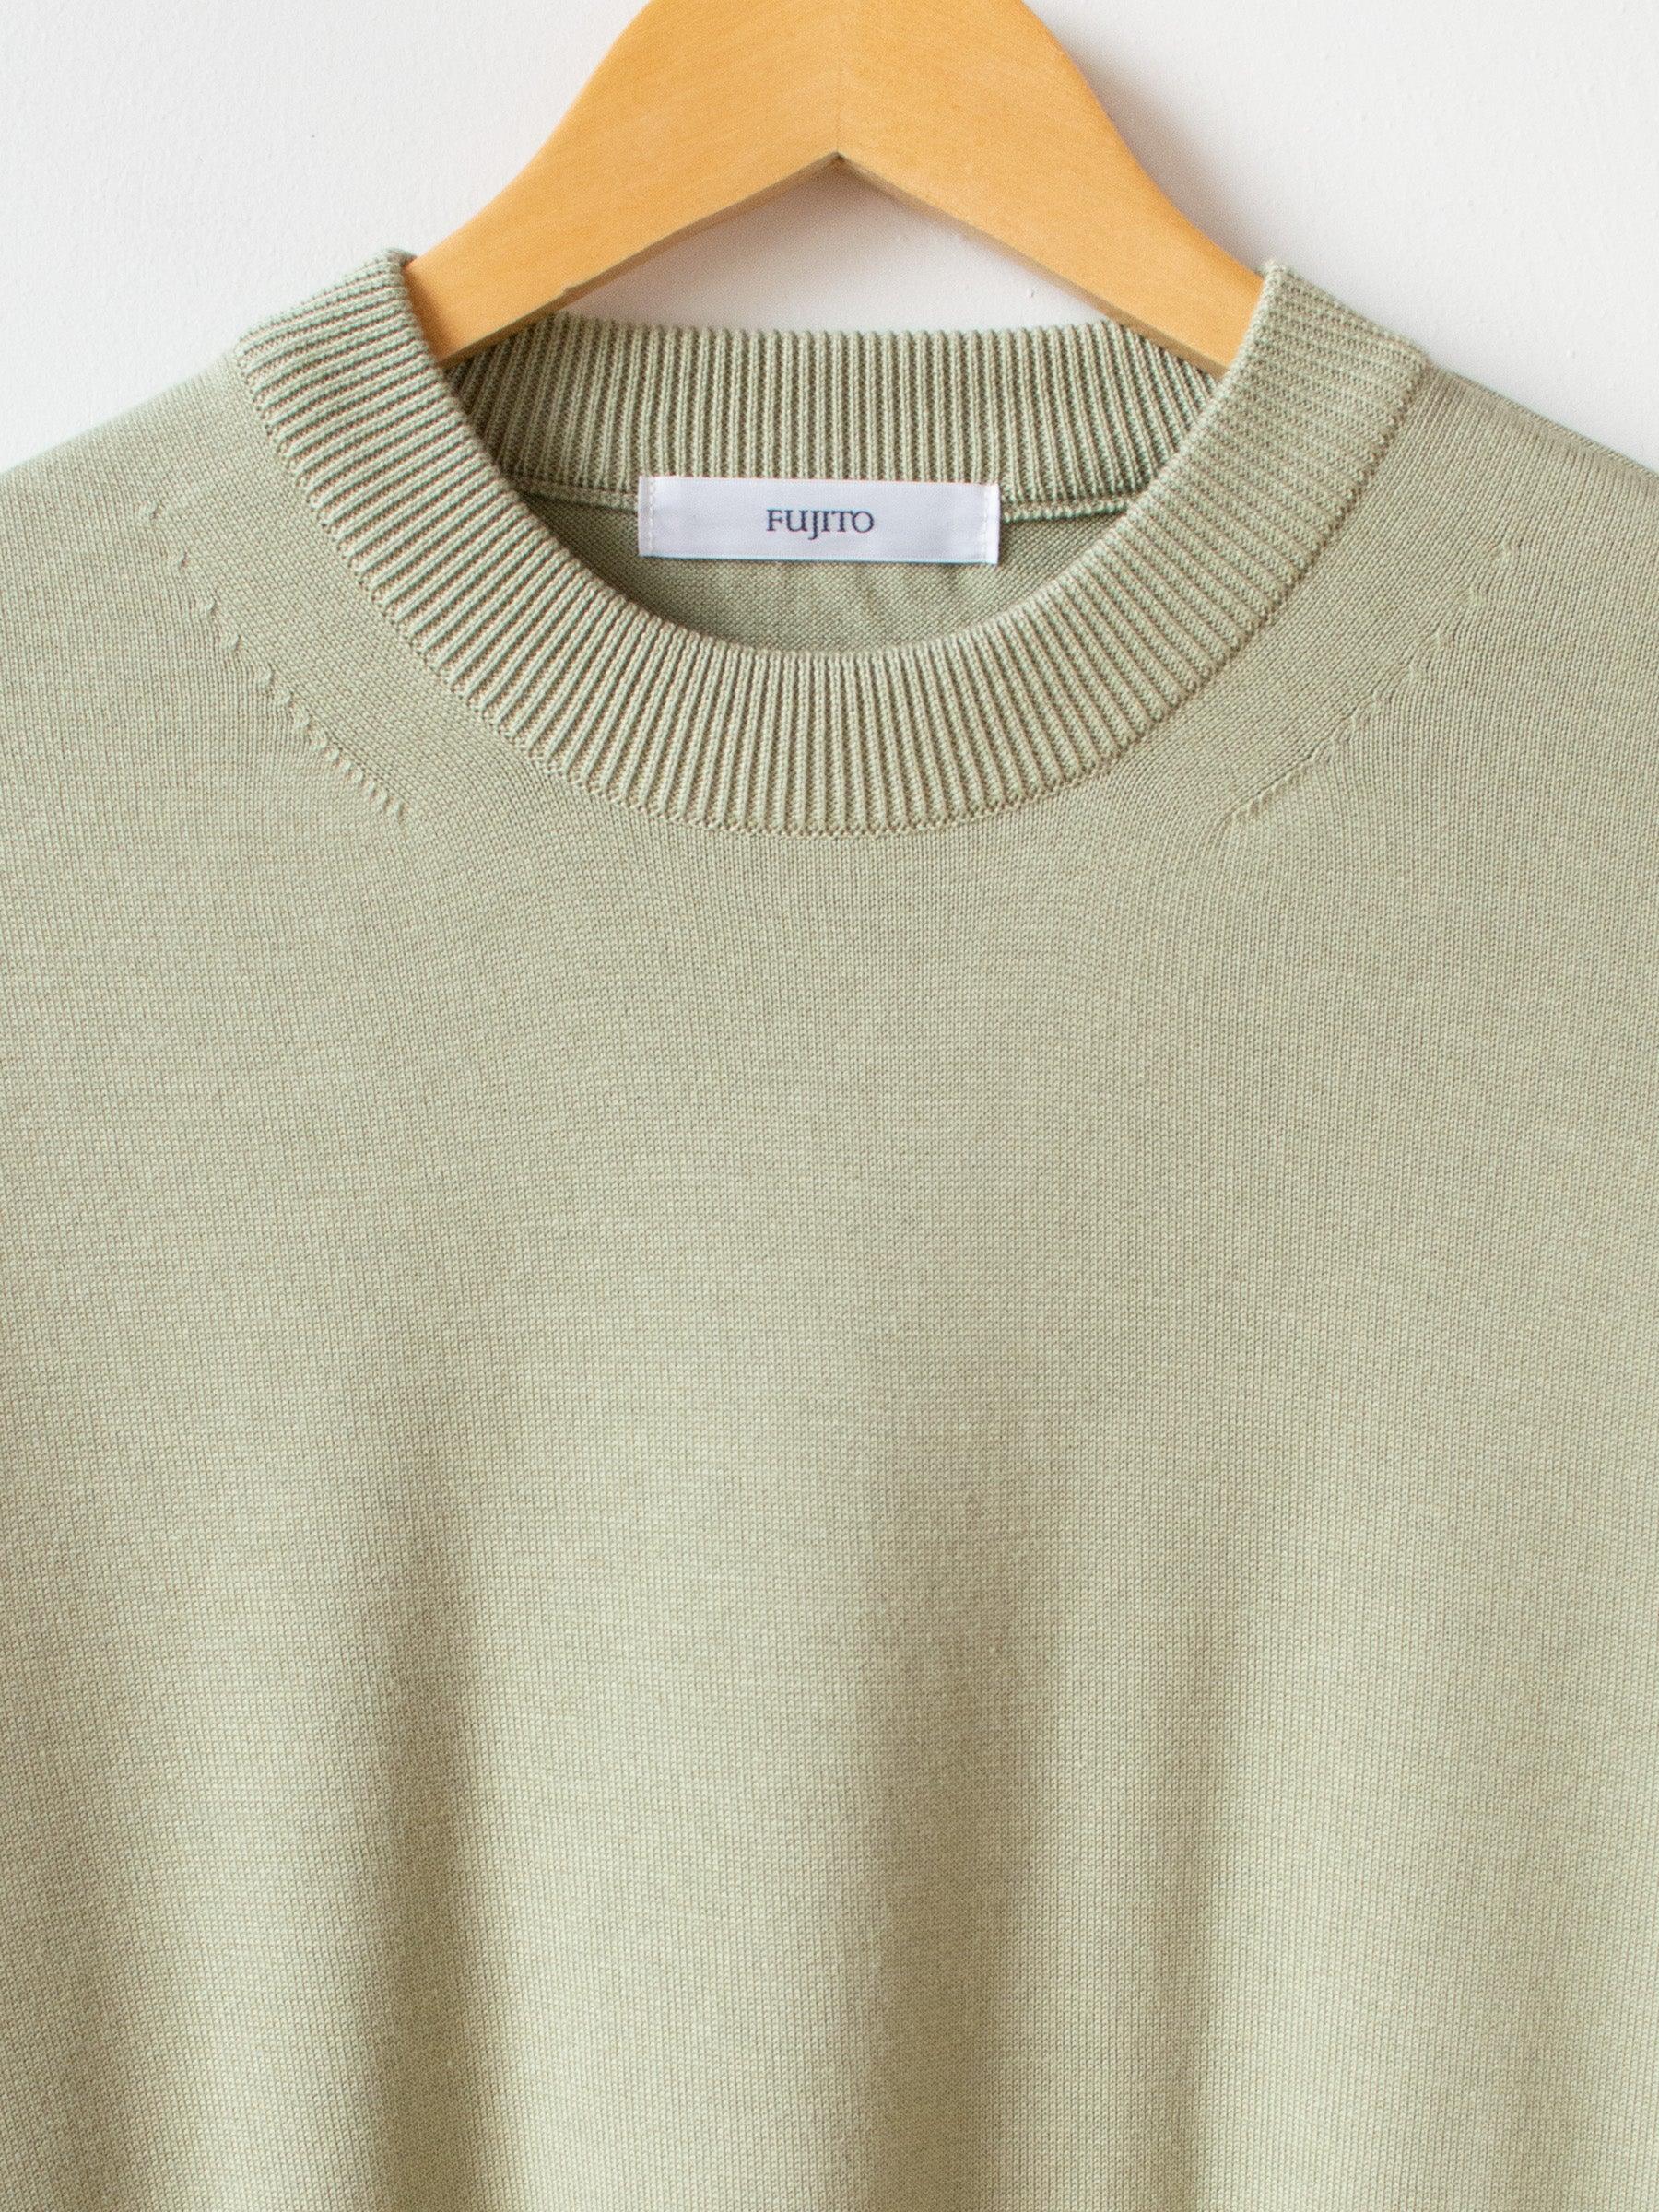 Namu Shop - Fujito Co Silk C/N Knit Sweater - Moss